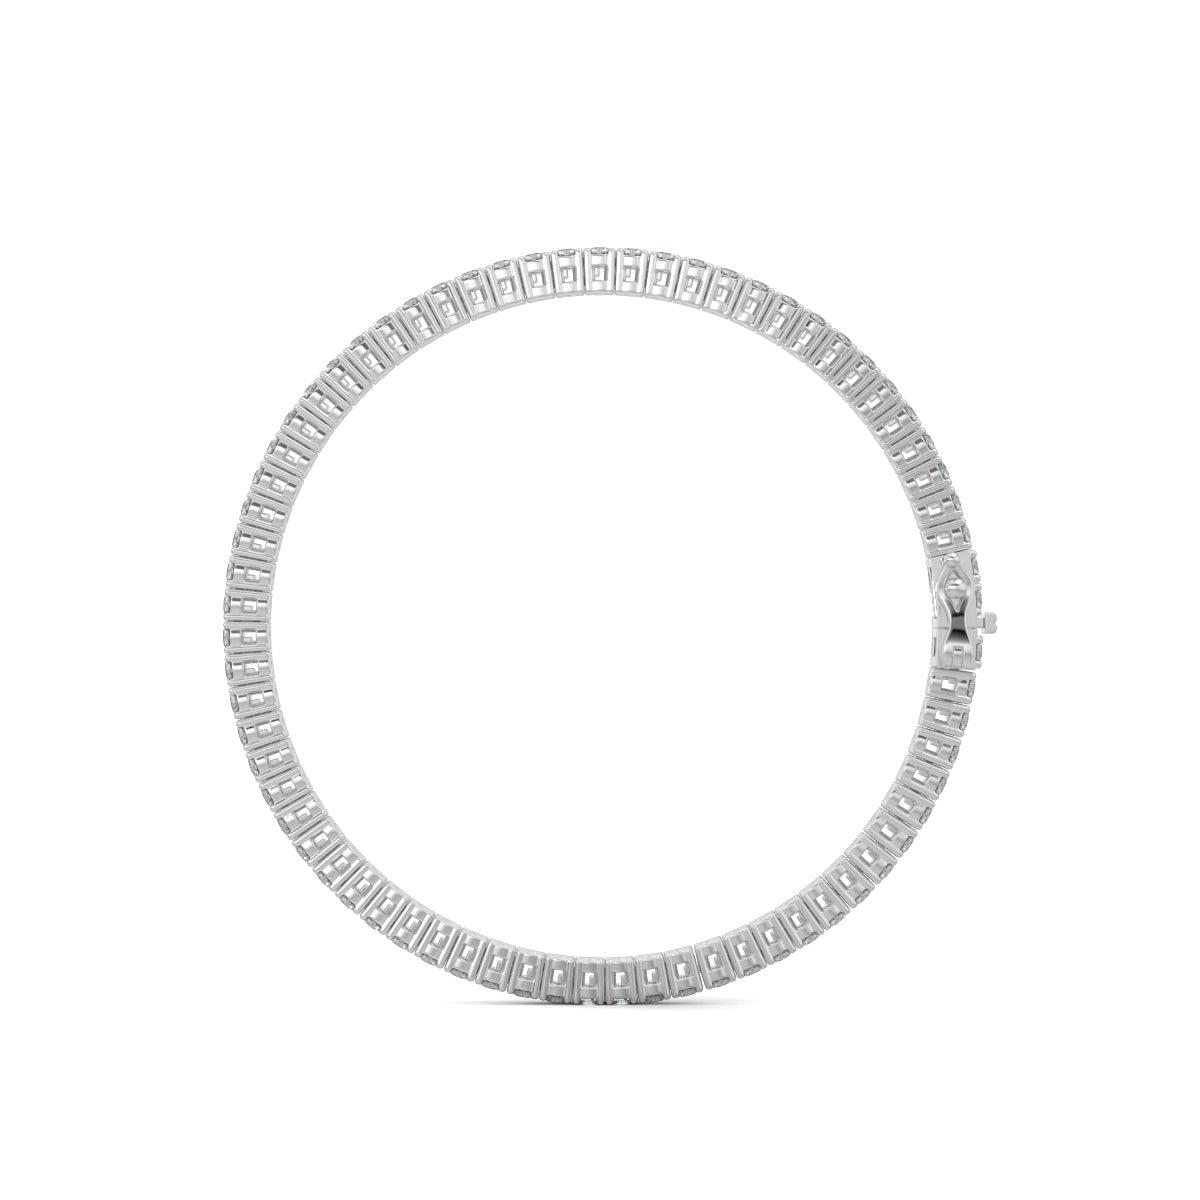 White Gold, Diamond Bracelet, Natural diamond bracelet, Lab-grown diamond bracelet, 20-Pointer Tennis Bracelet, tennis bracelet, prong setting, jewelry